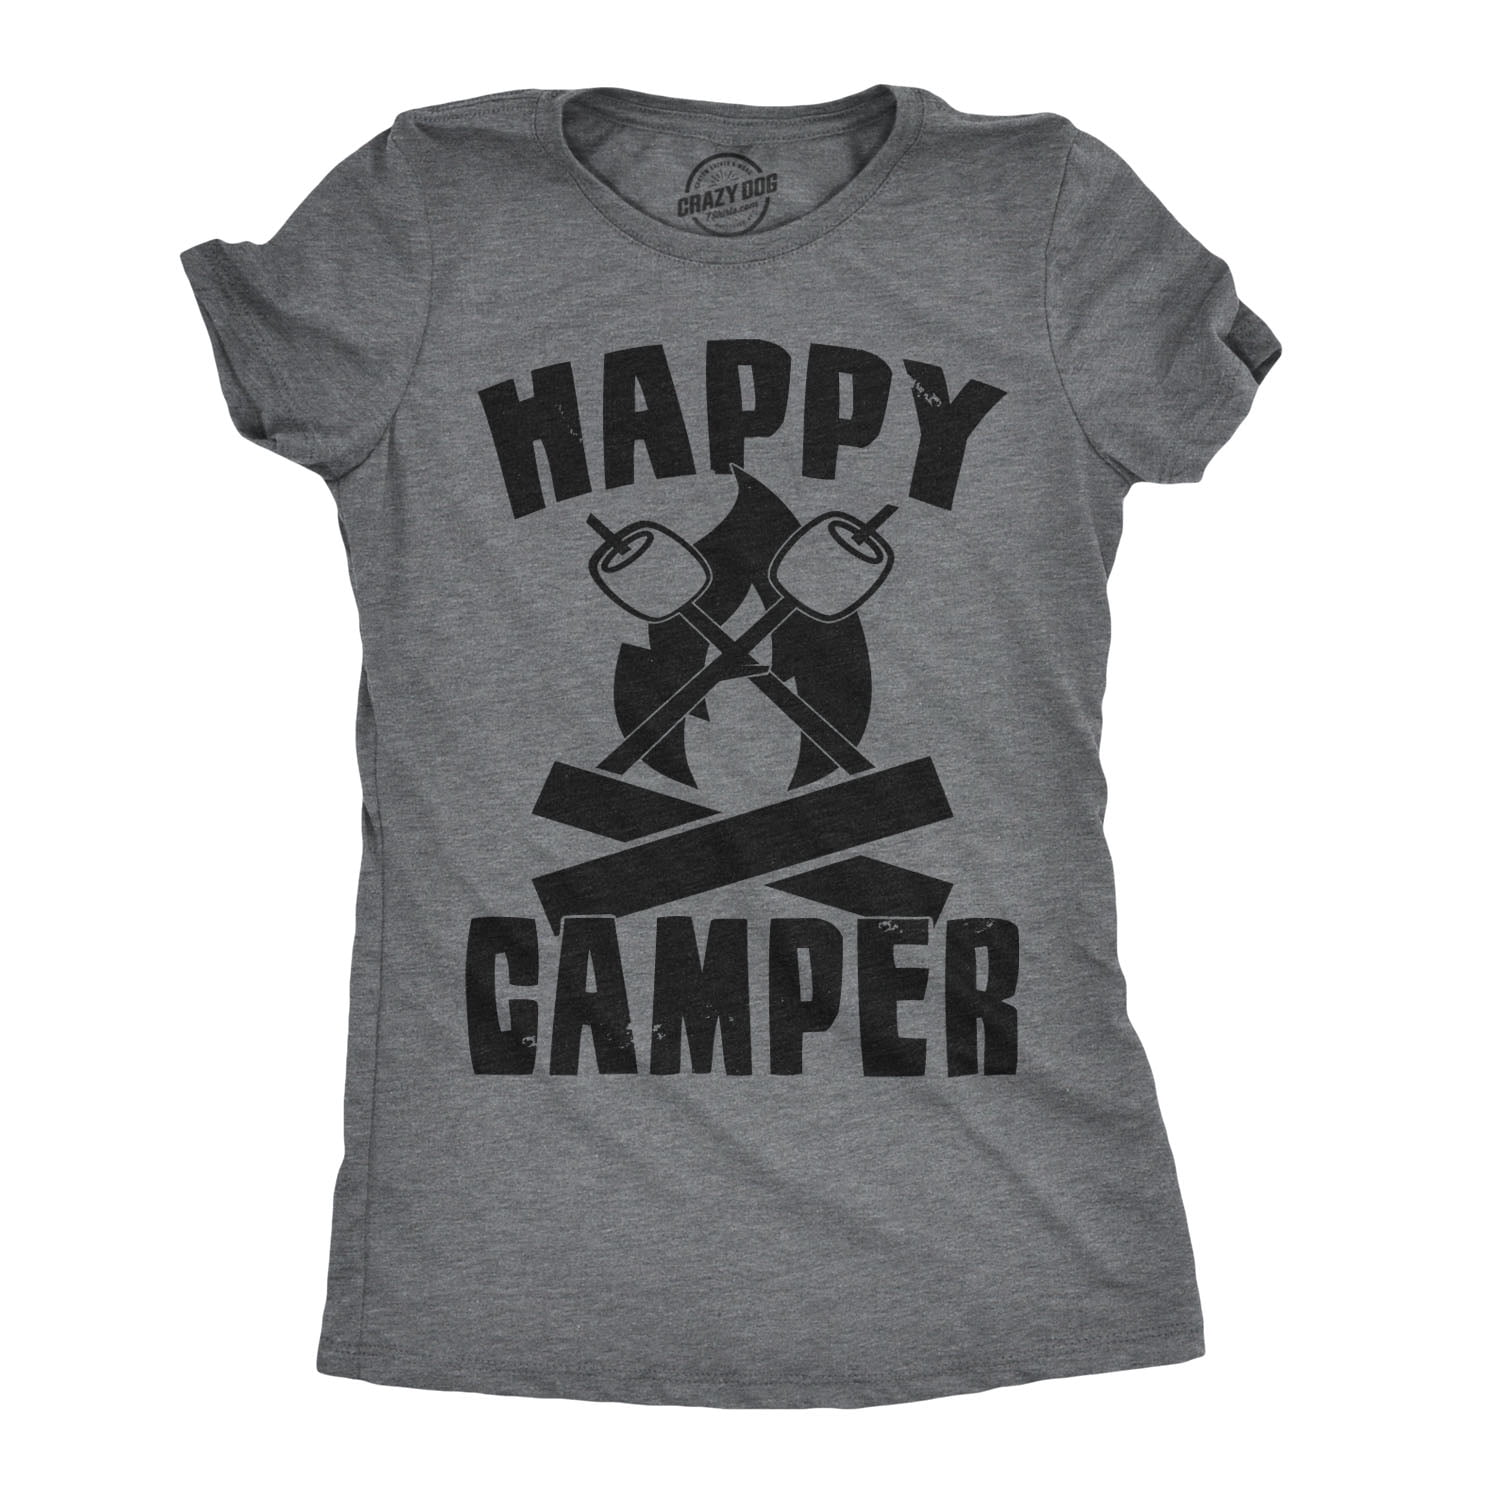 MAXIMGR Happy Camper Shirt Women Summer Vacation T-Shirt Funny Camping Graphic Tee Shirt Short Sleeve Tee Top